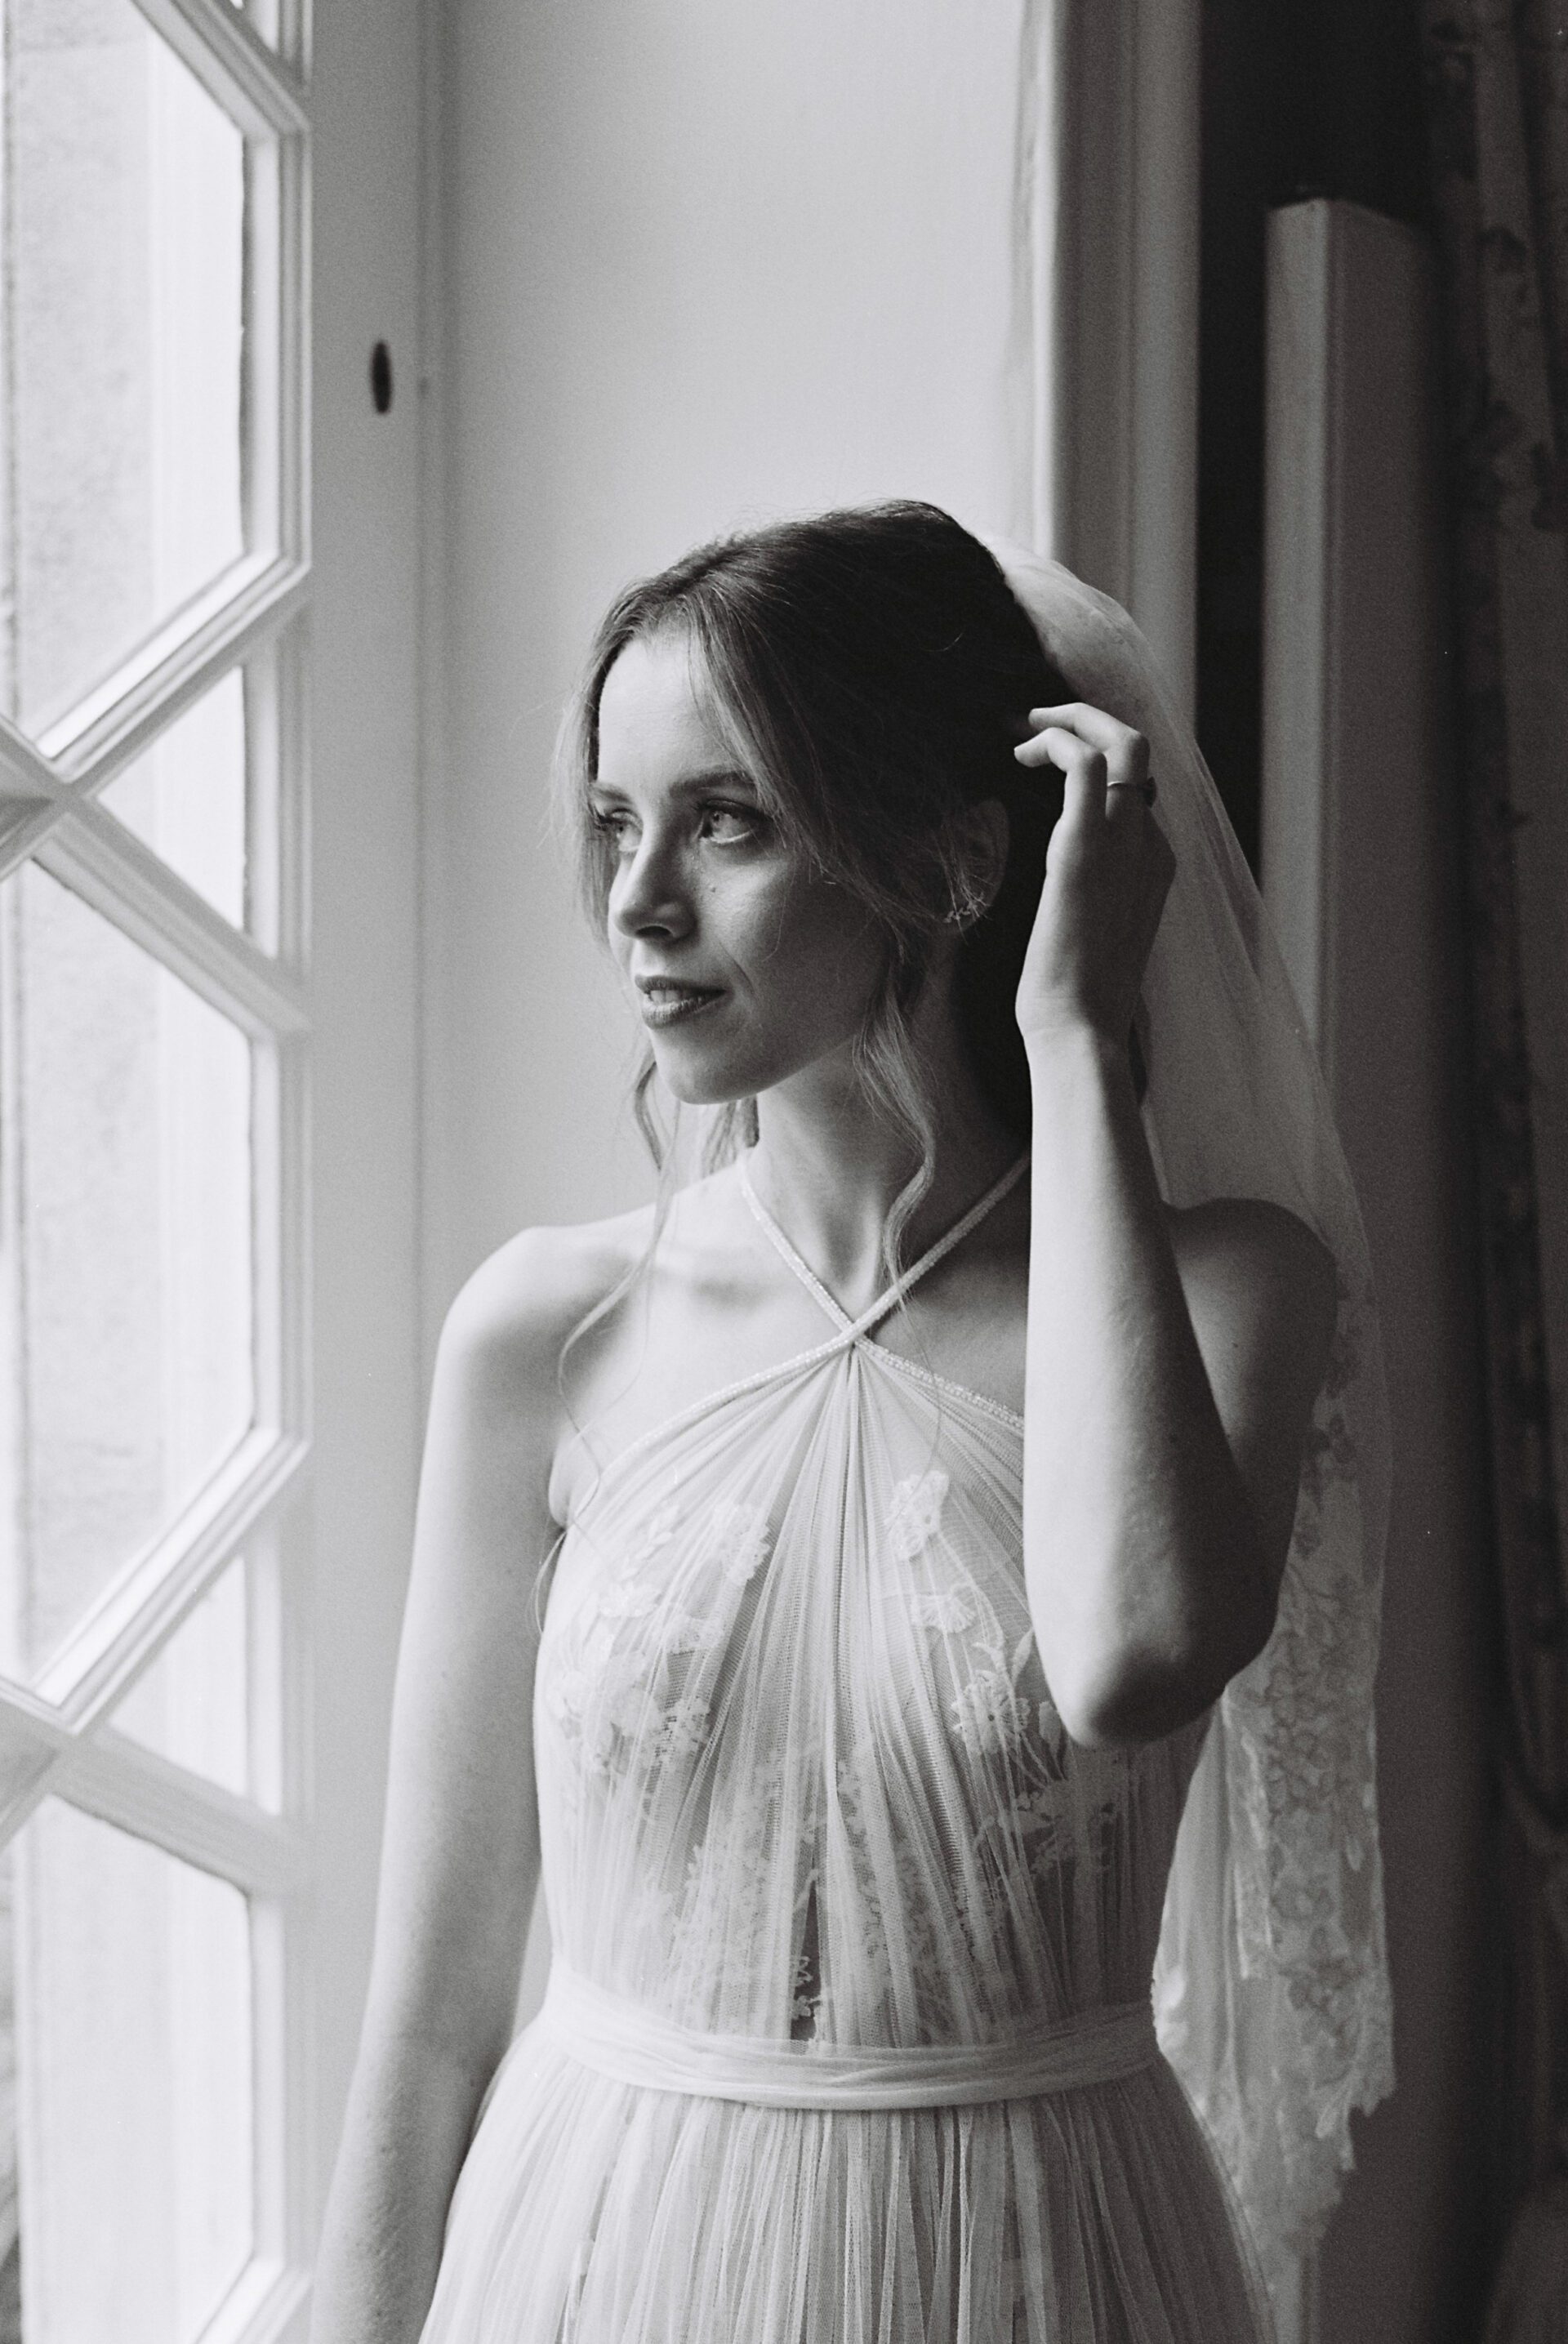 Bridal portraits at Gloucestershire wedding venue, Frampton Court Estate, captured on 35mm film